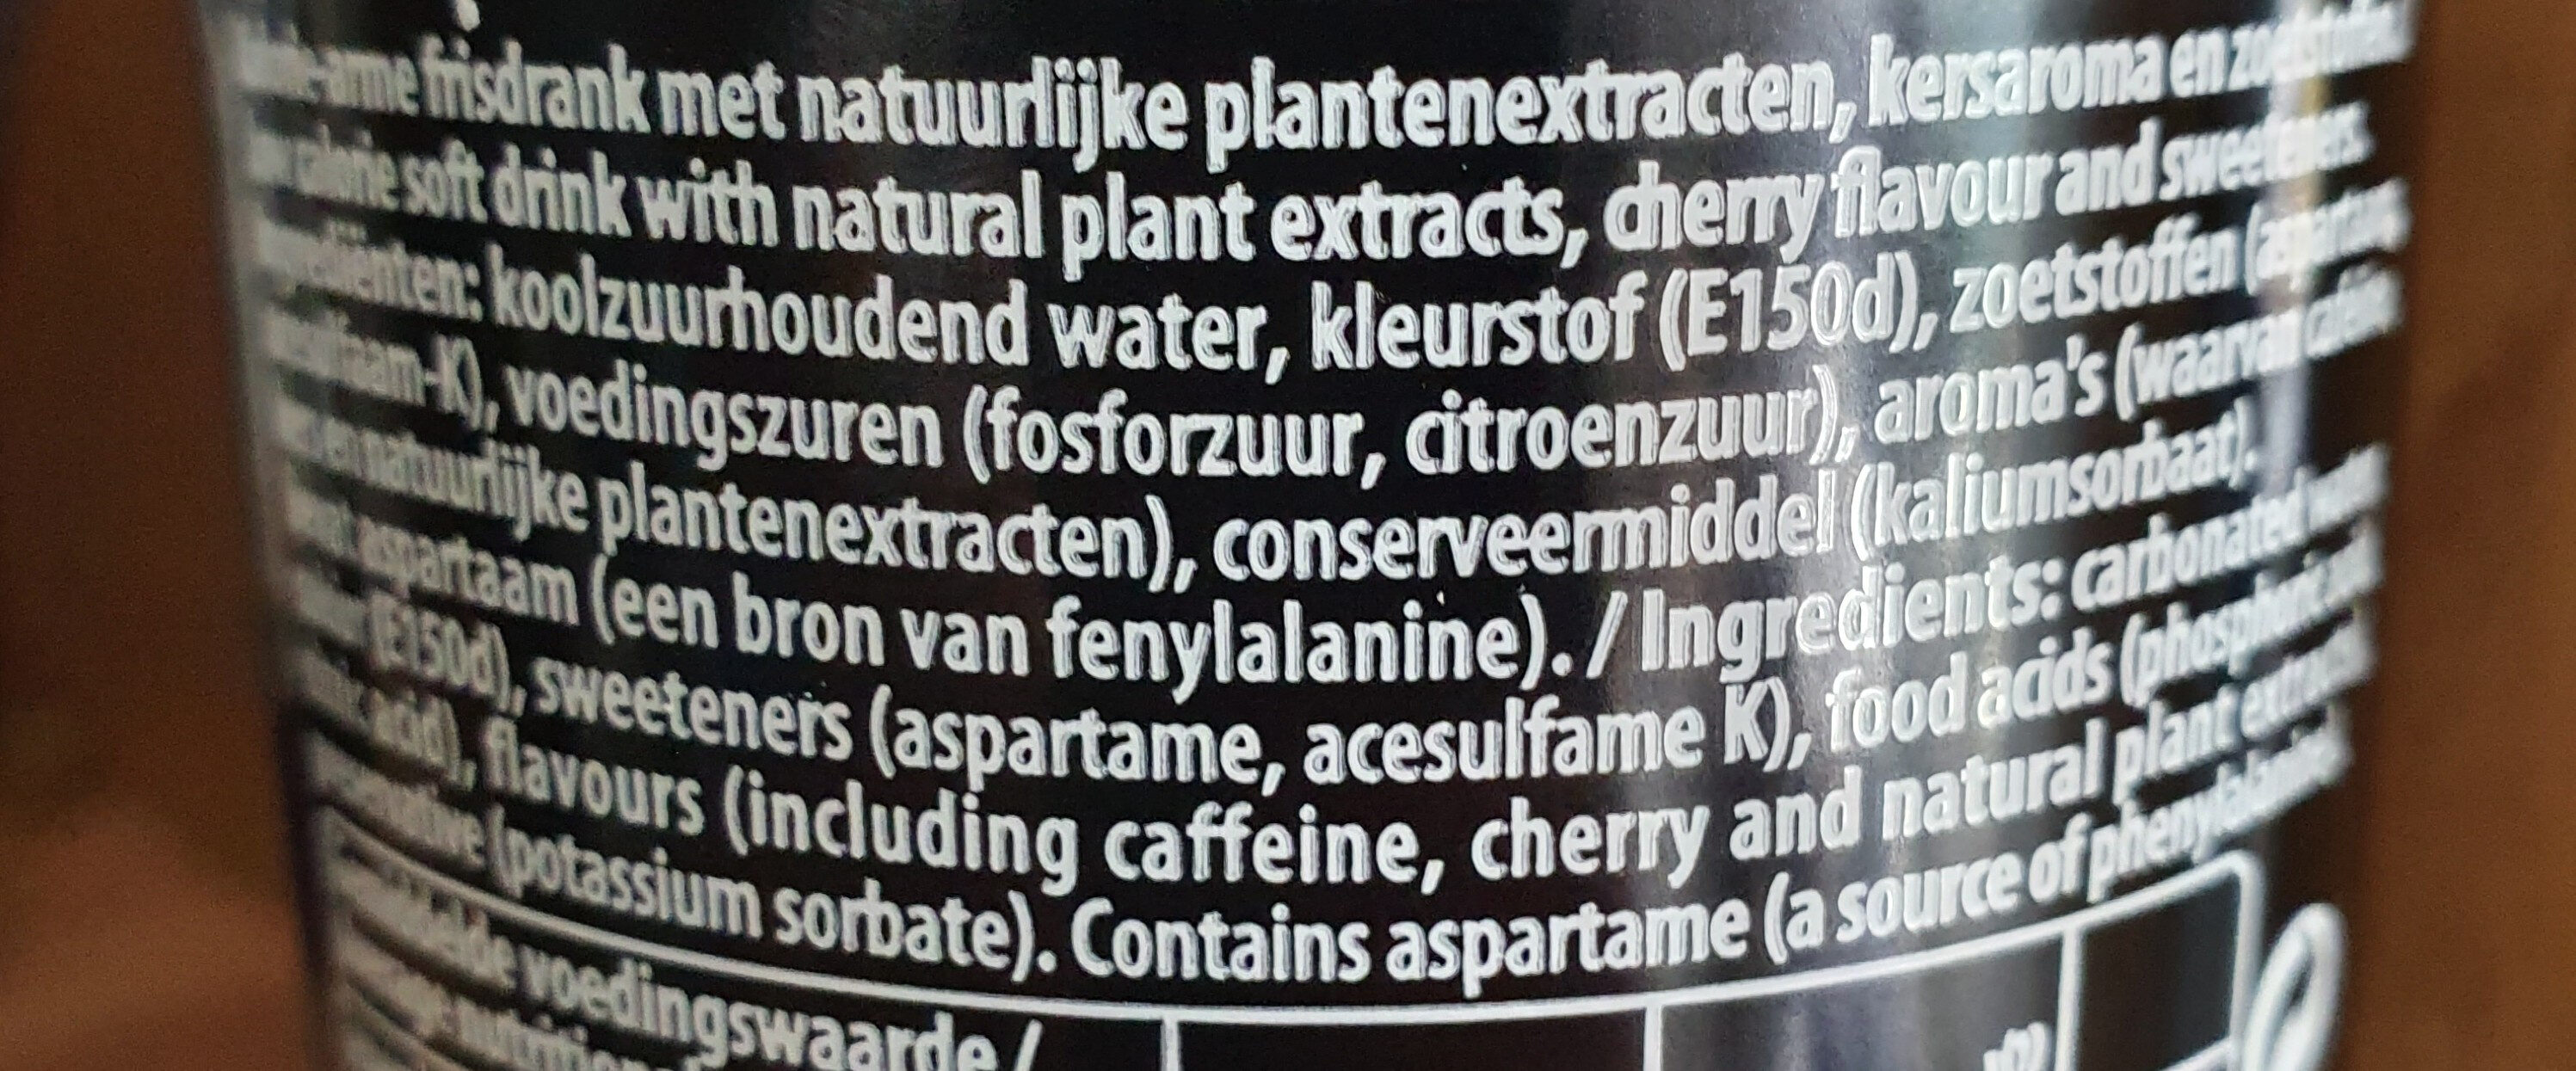 Pepsi max cherry - Ingrediënten